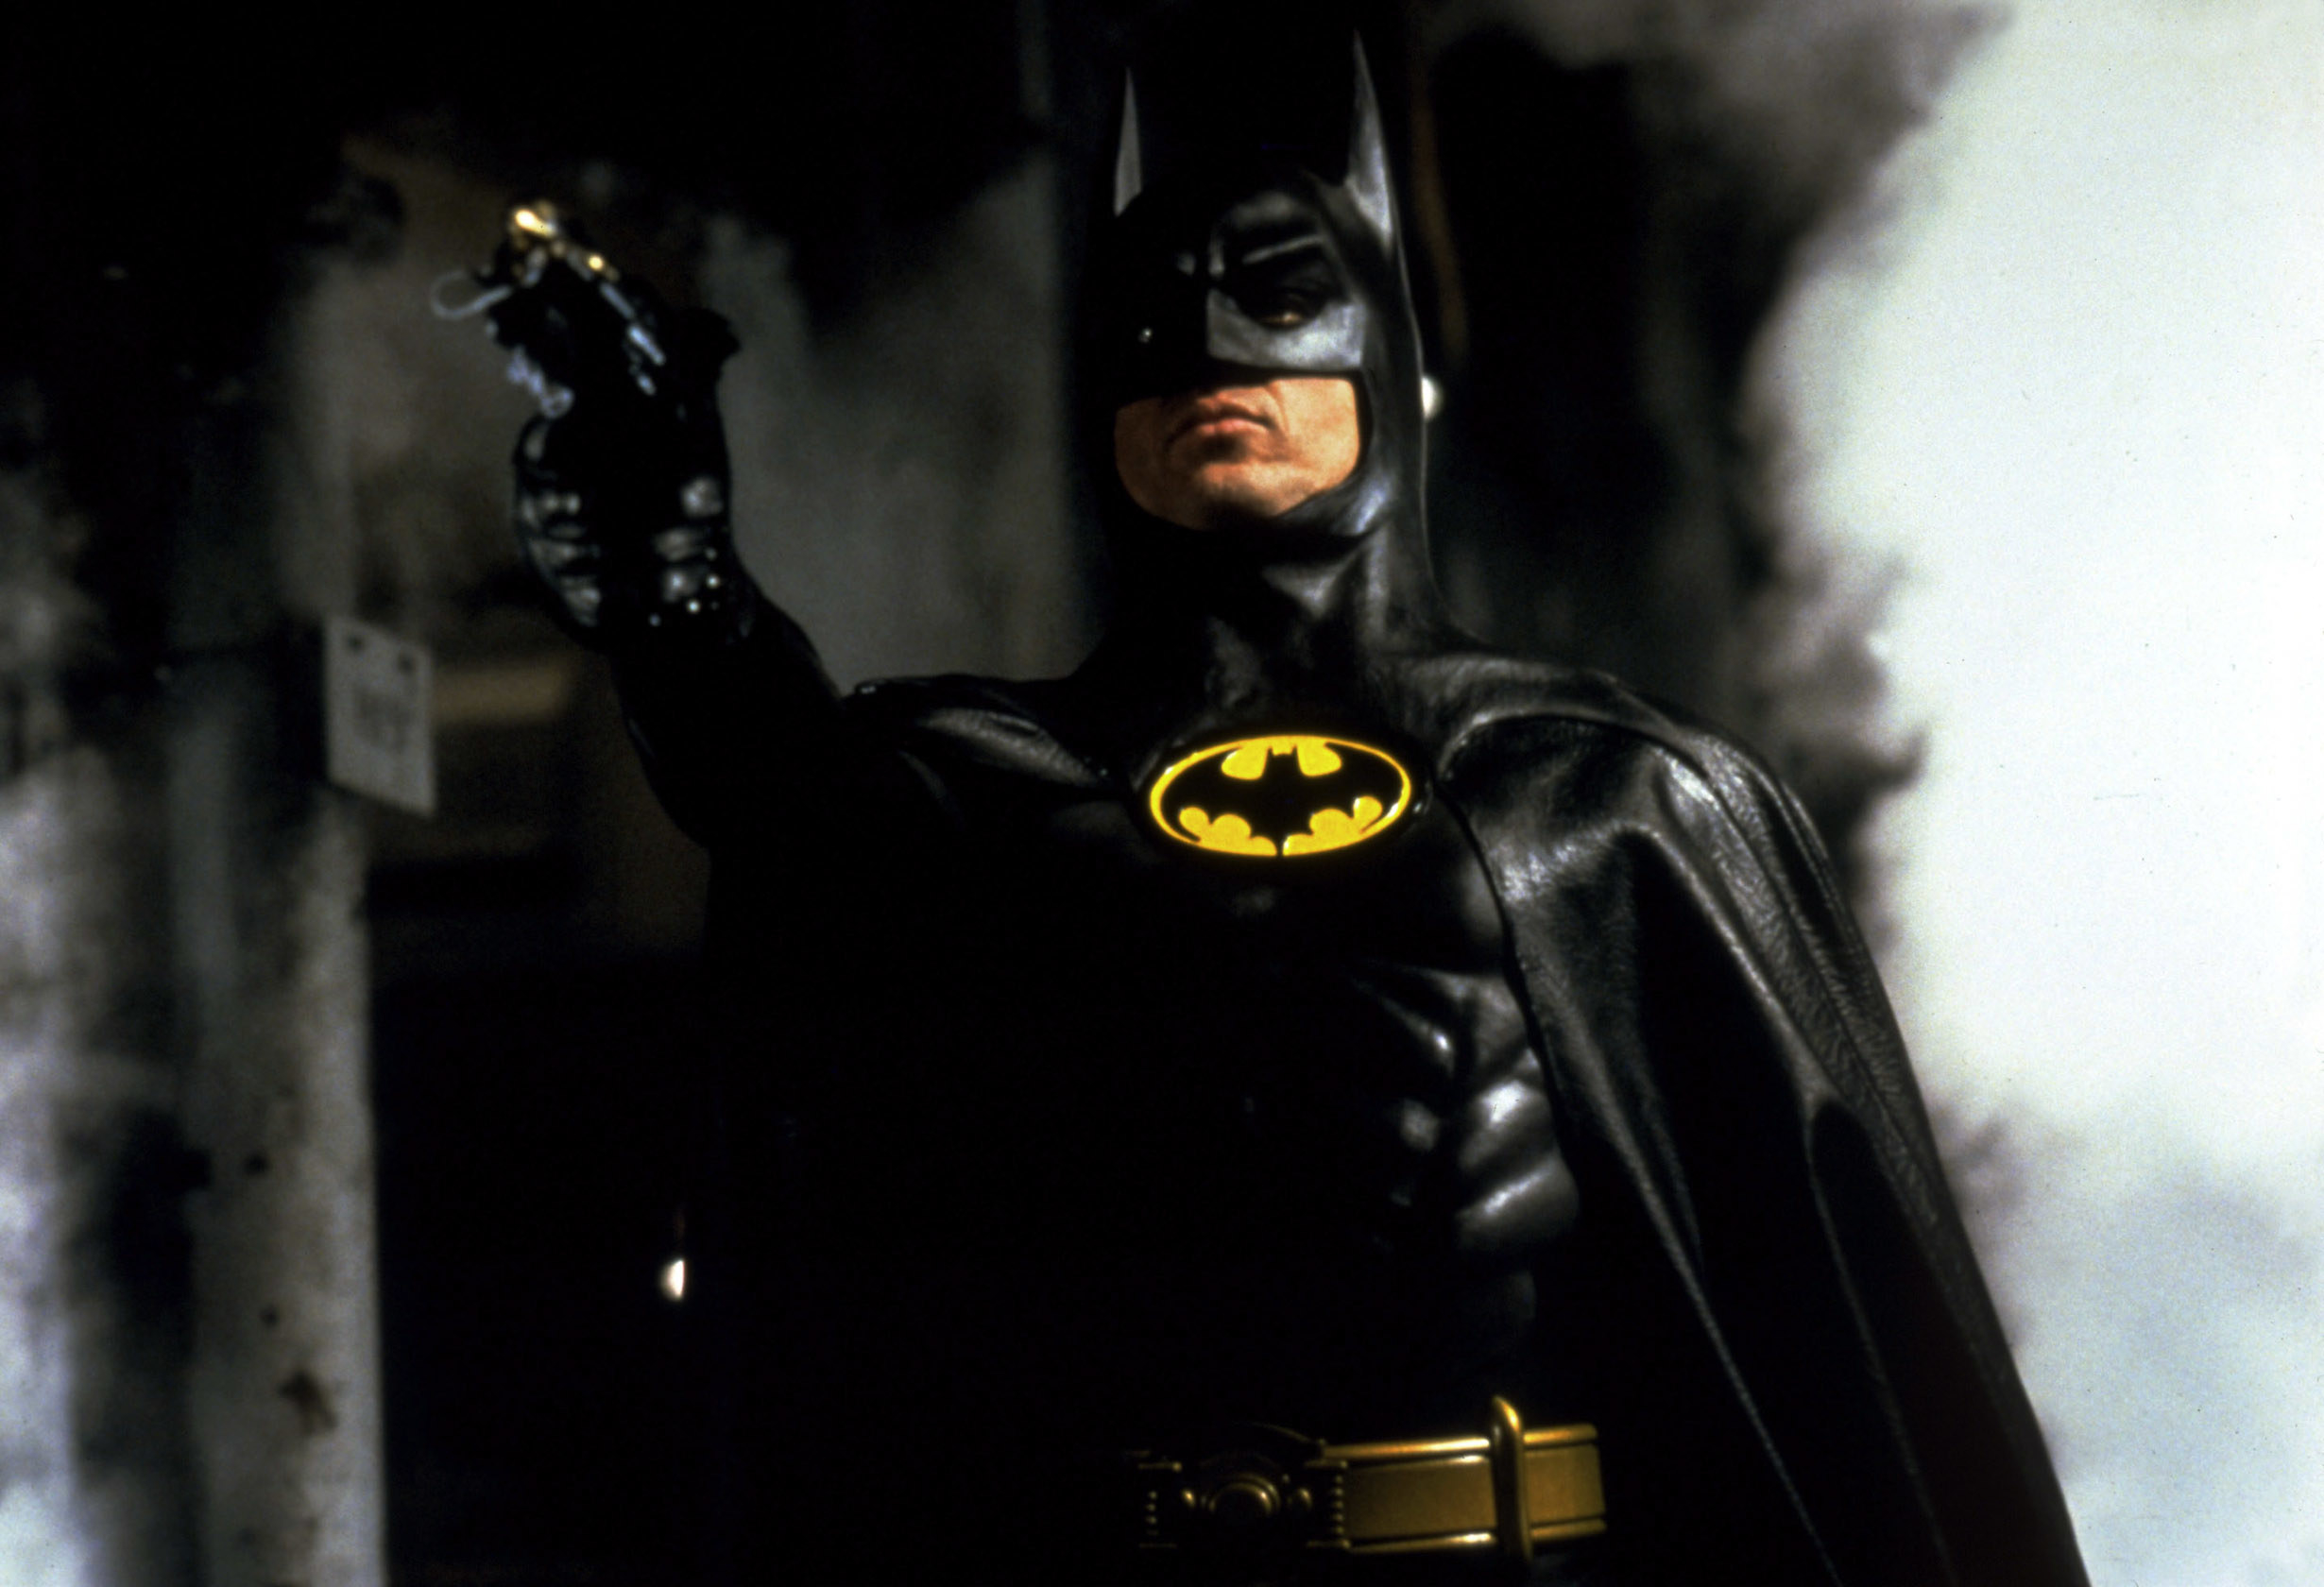 Batman points his Bat device in the distance